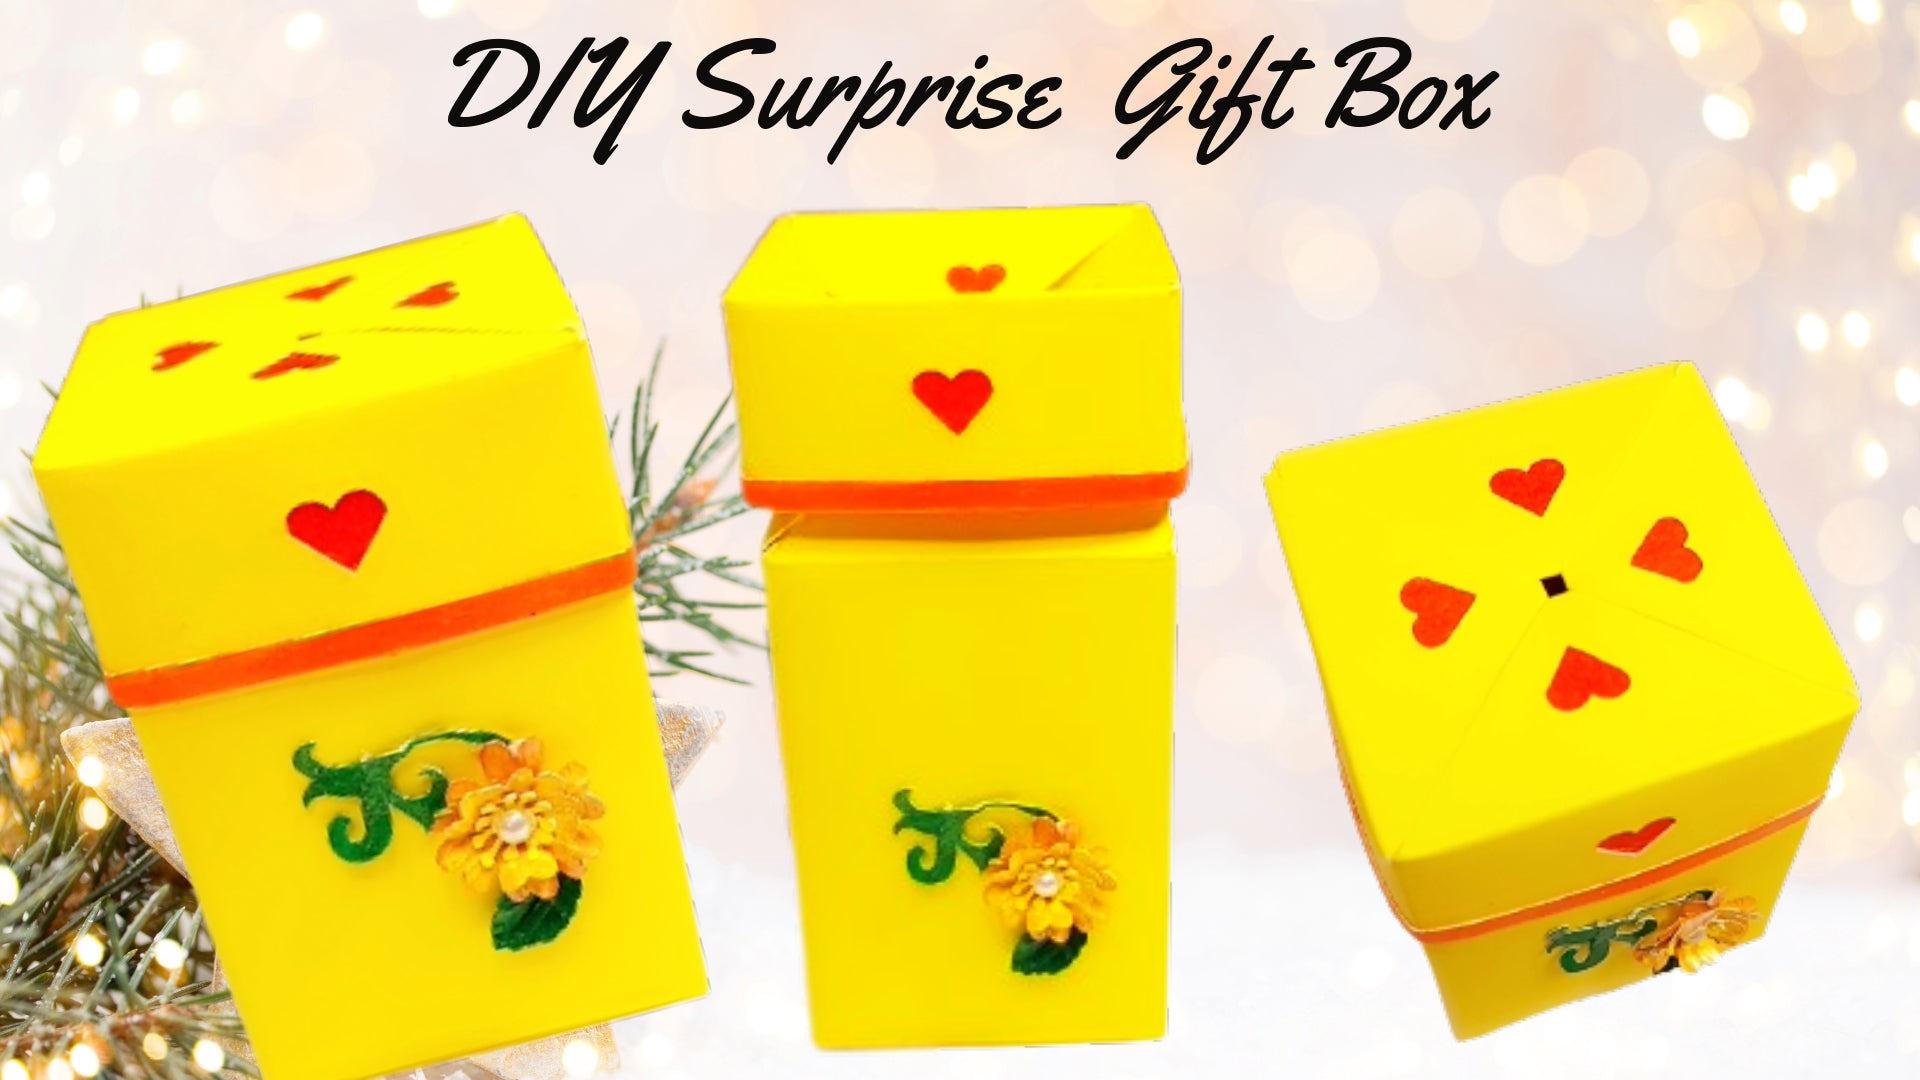 Surprise Gift Box Template (Free) - Ahaeli